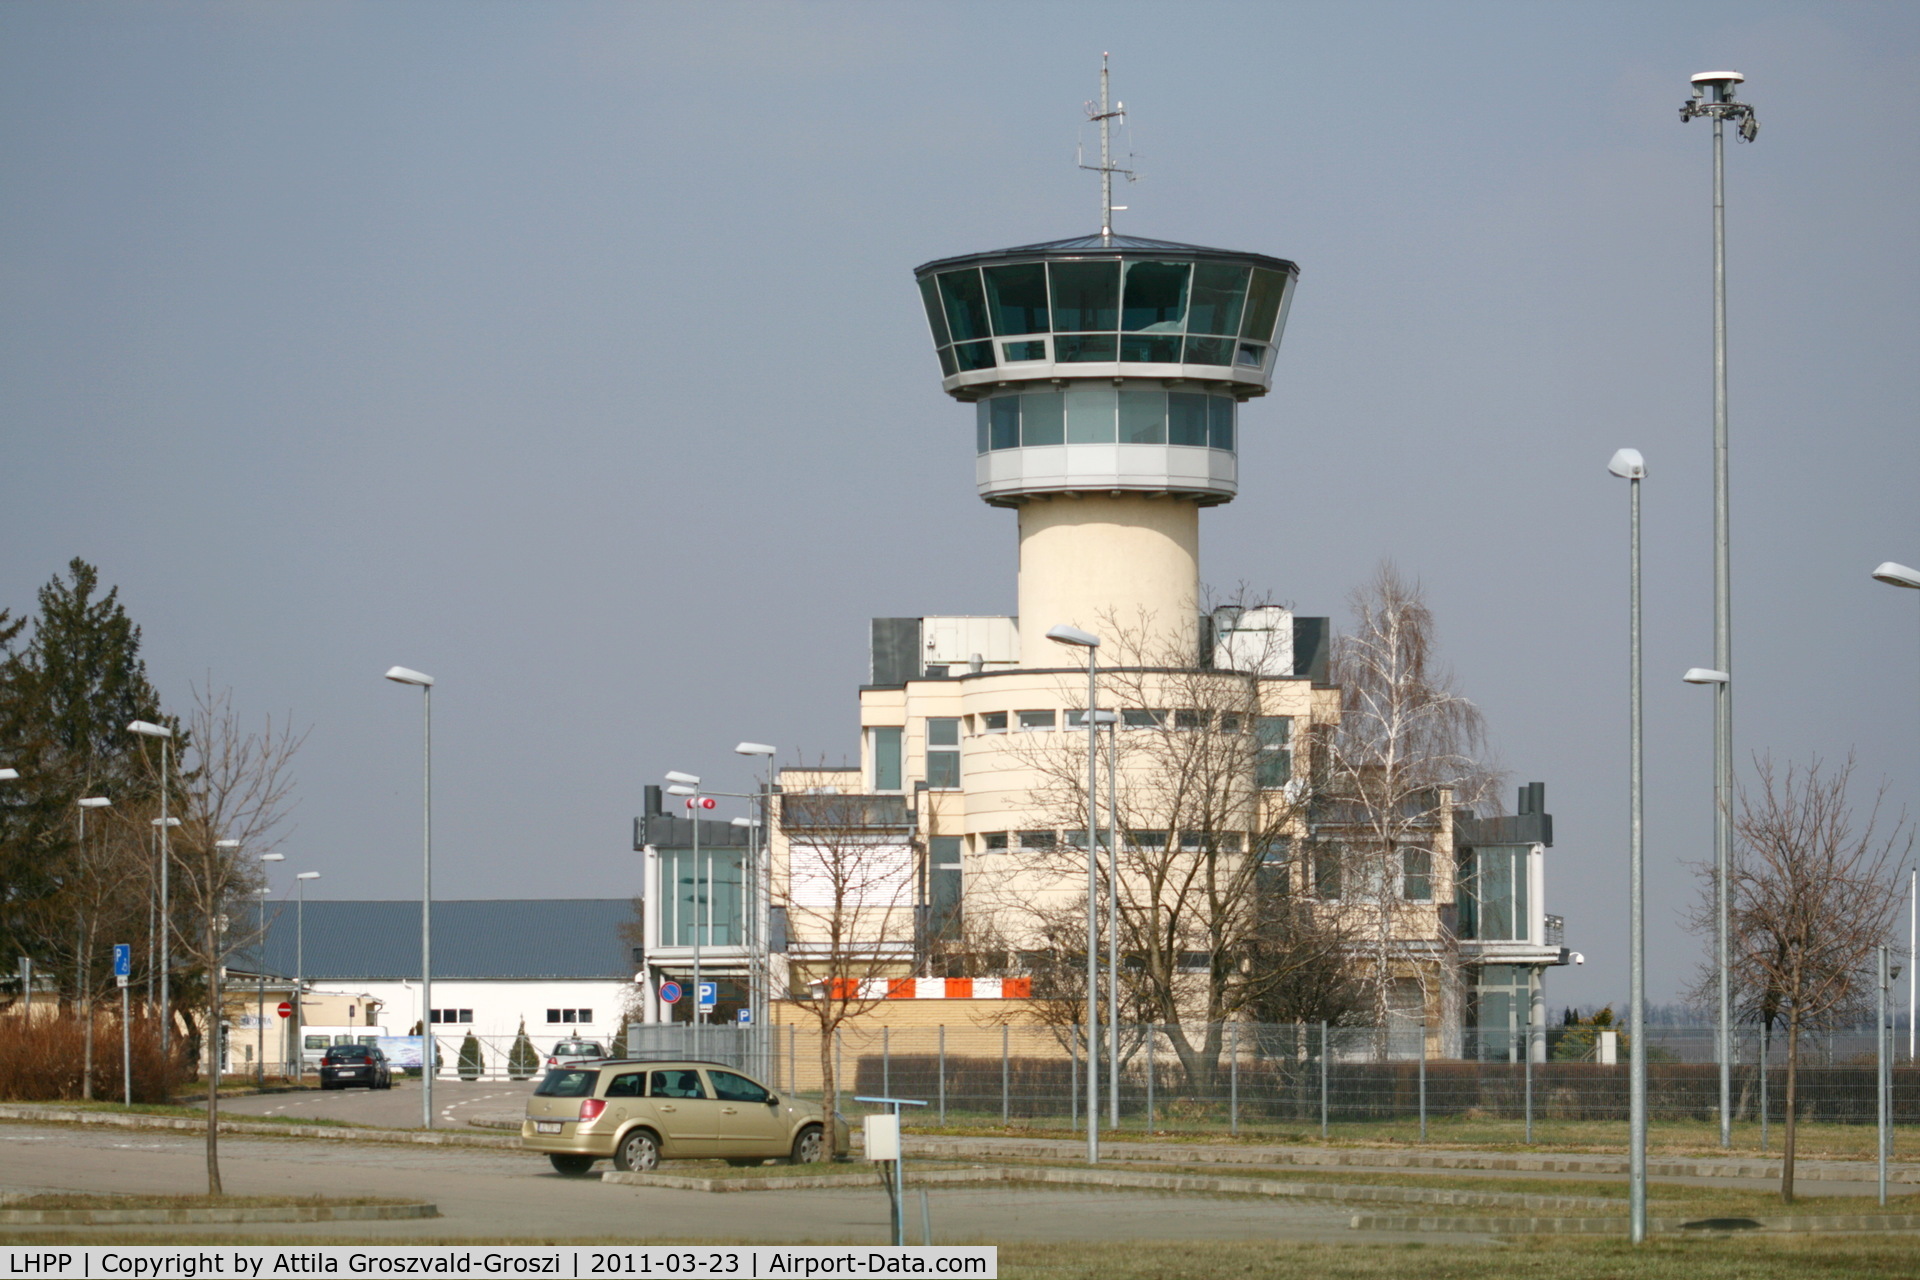 Pécs Pogány Airport, Pécs Hungary (LHPP) - Pécs-Pogány Airport, Hungary